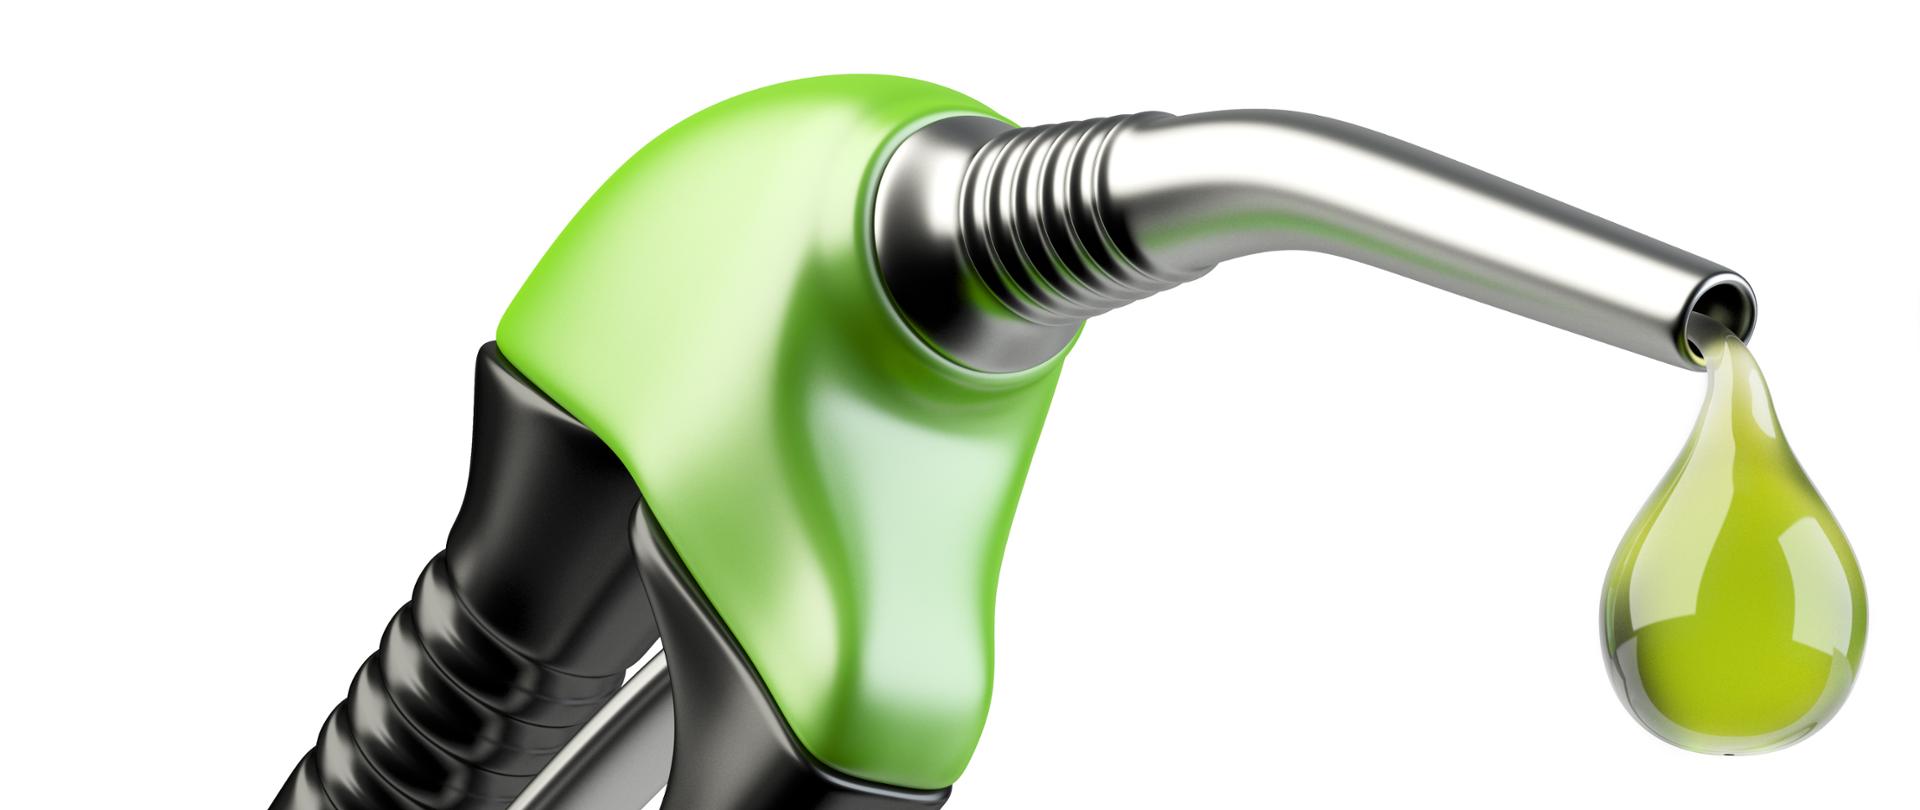 Green fuel pump nozzle with drop oil. Bio fuel concept.